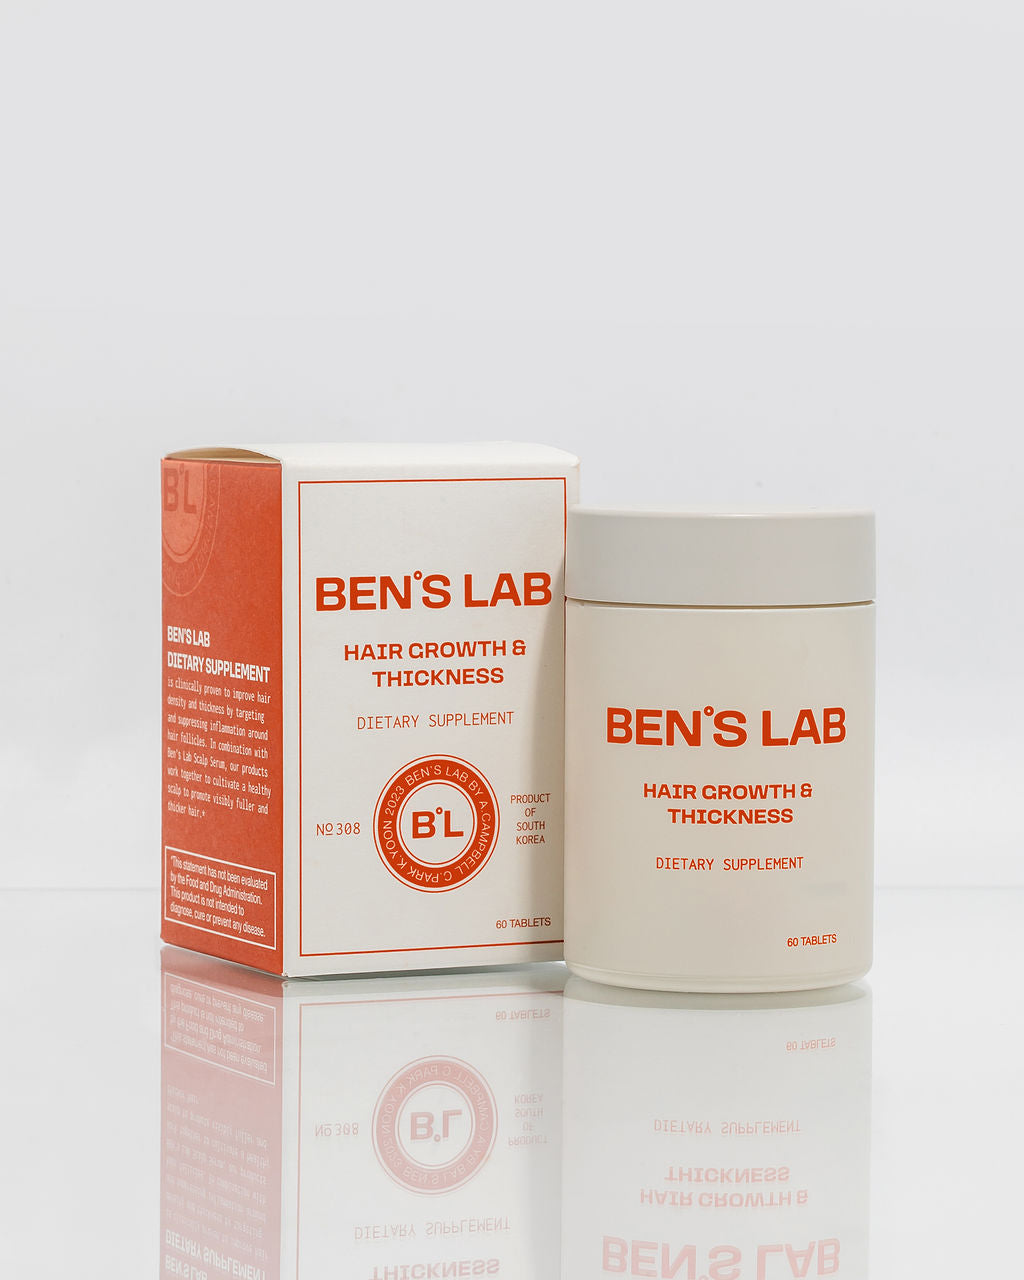 Ben's Lab Hair Supplement Box and Bottle